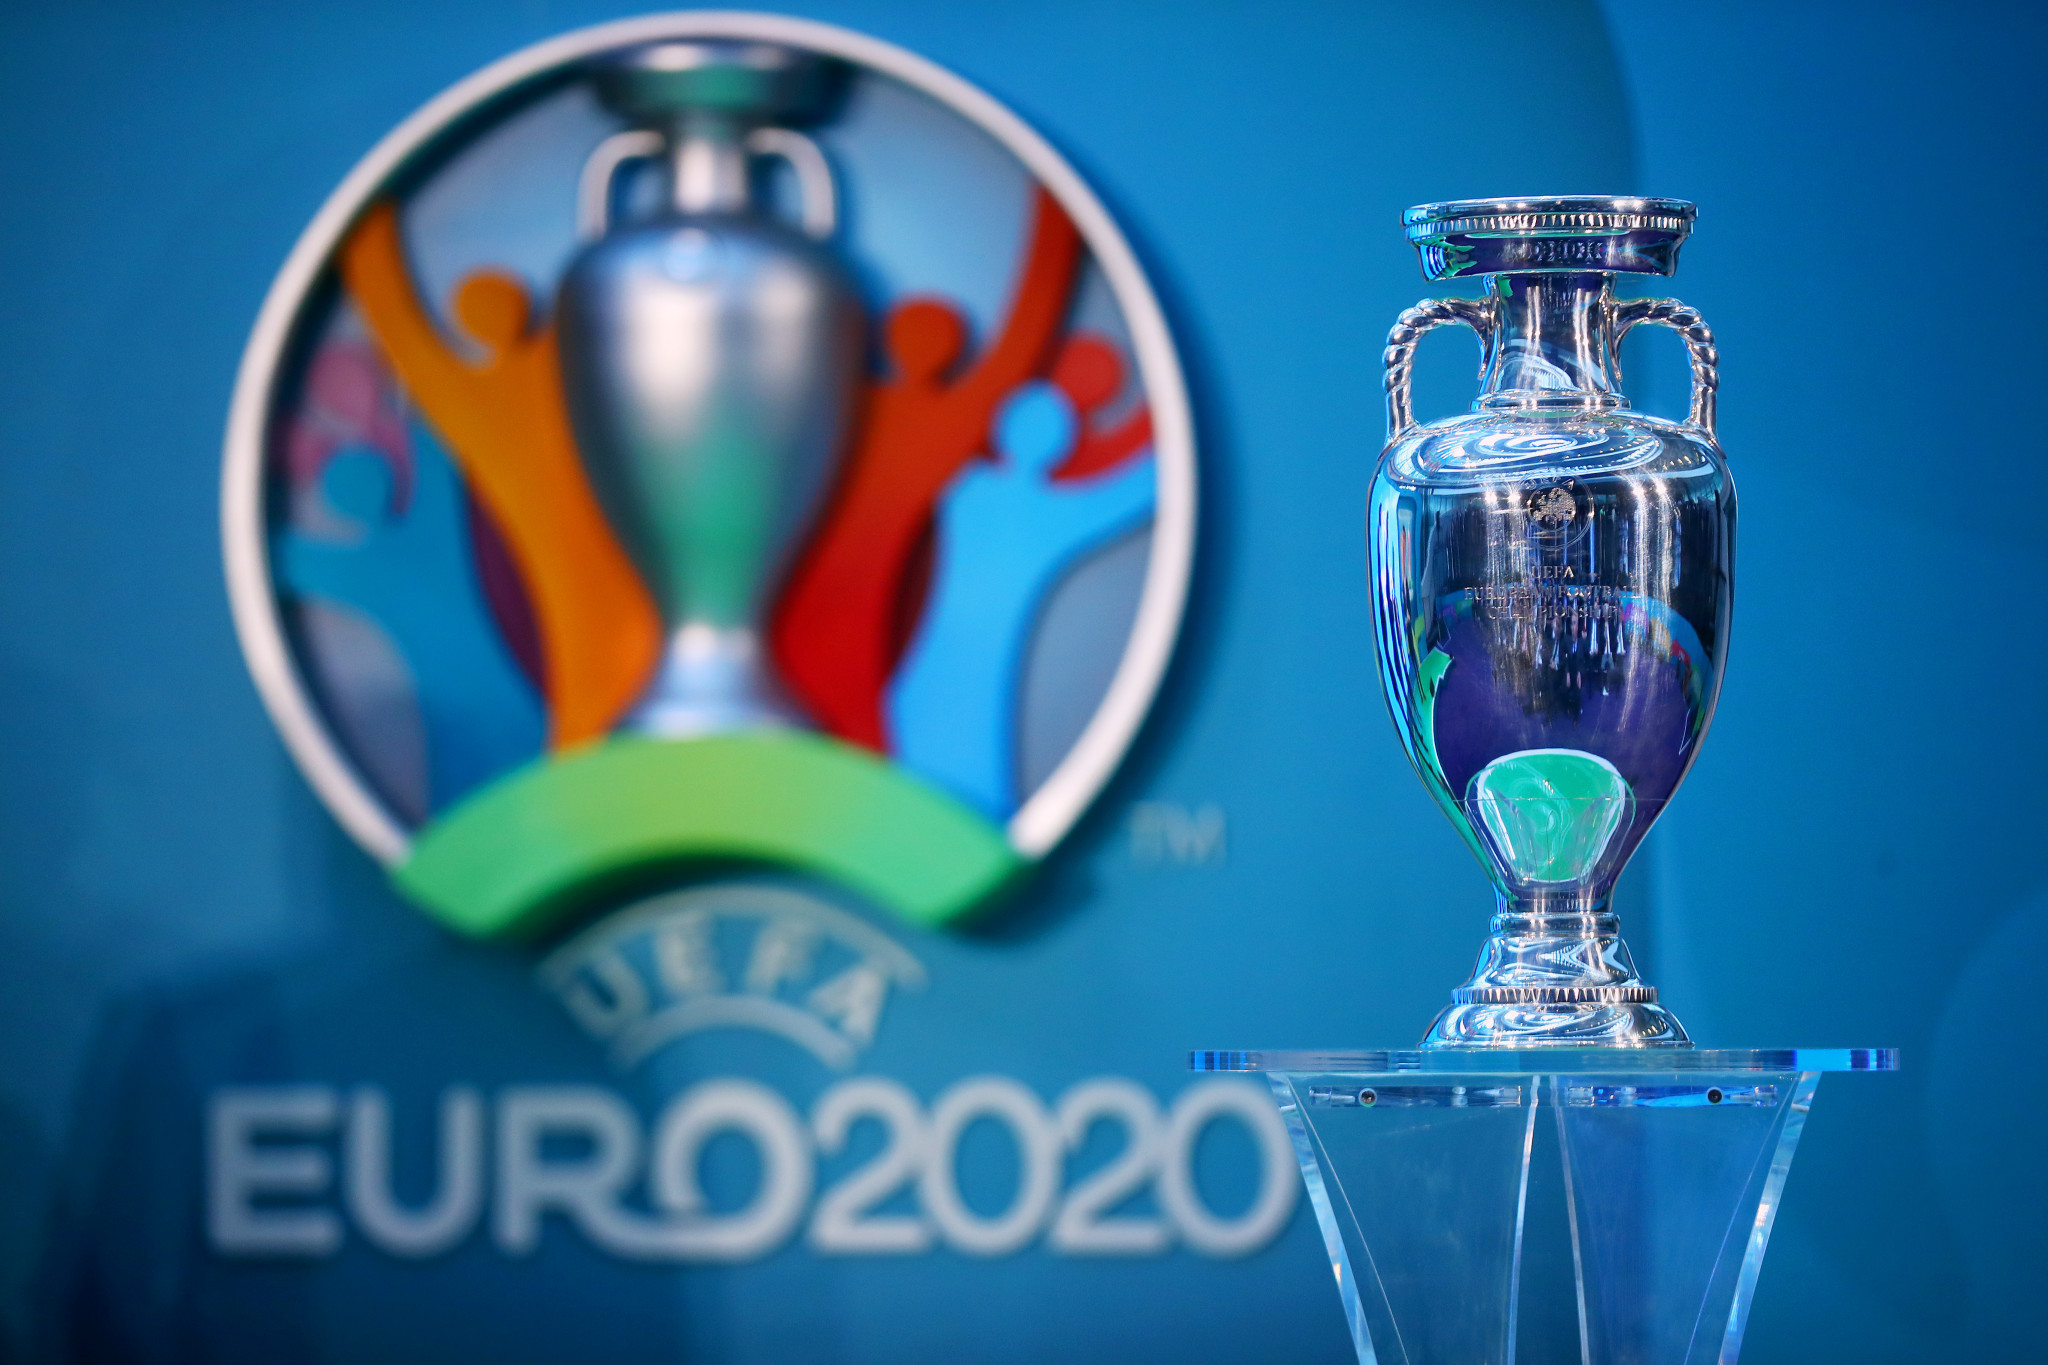 UEFA Executive Committee meeting postponed over Euro 2020 host uncertainty